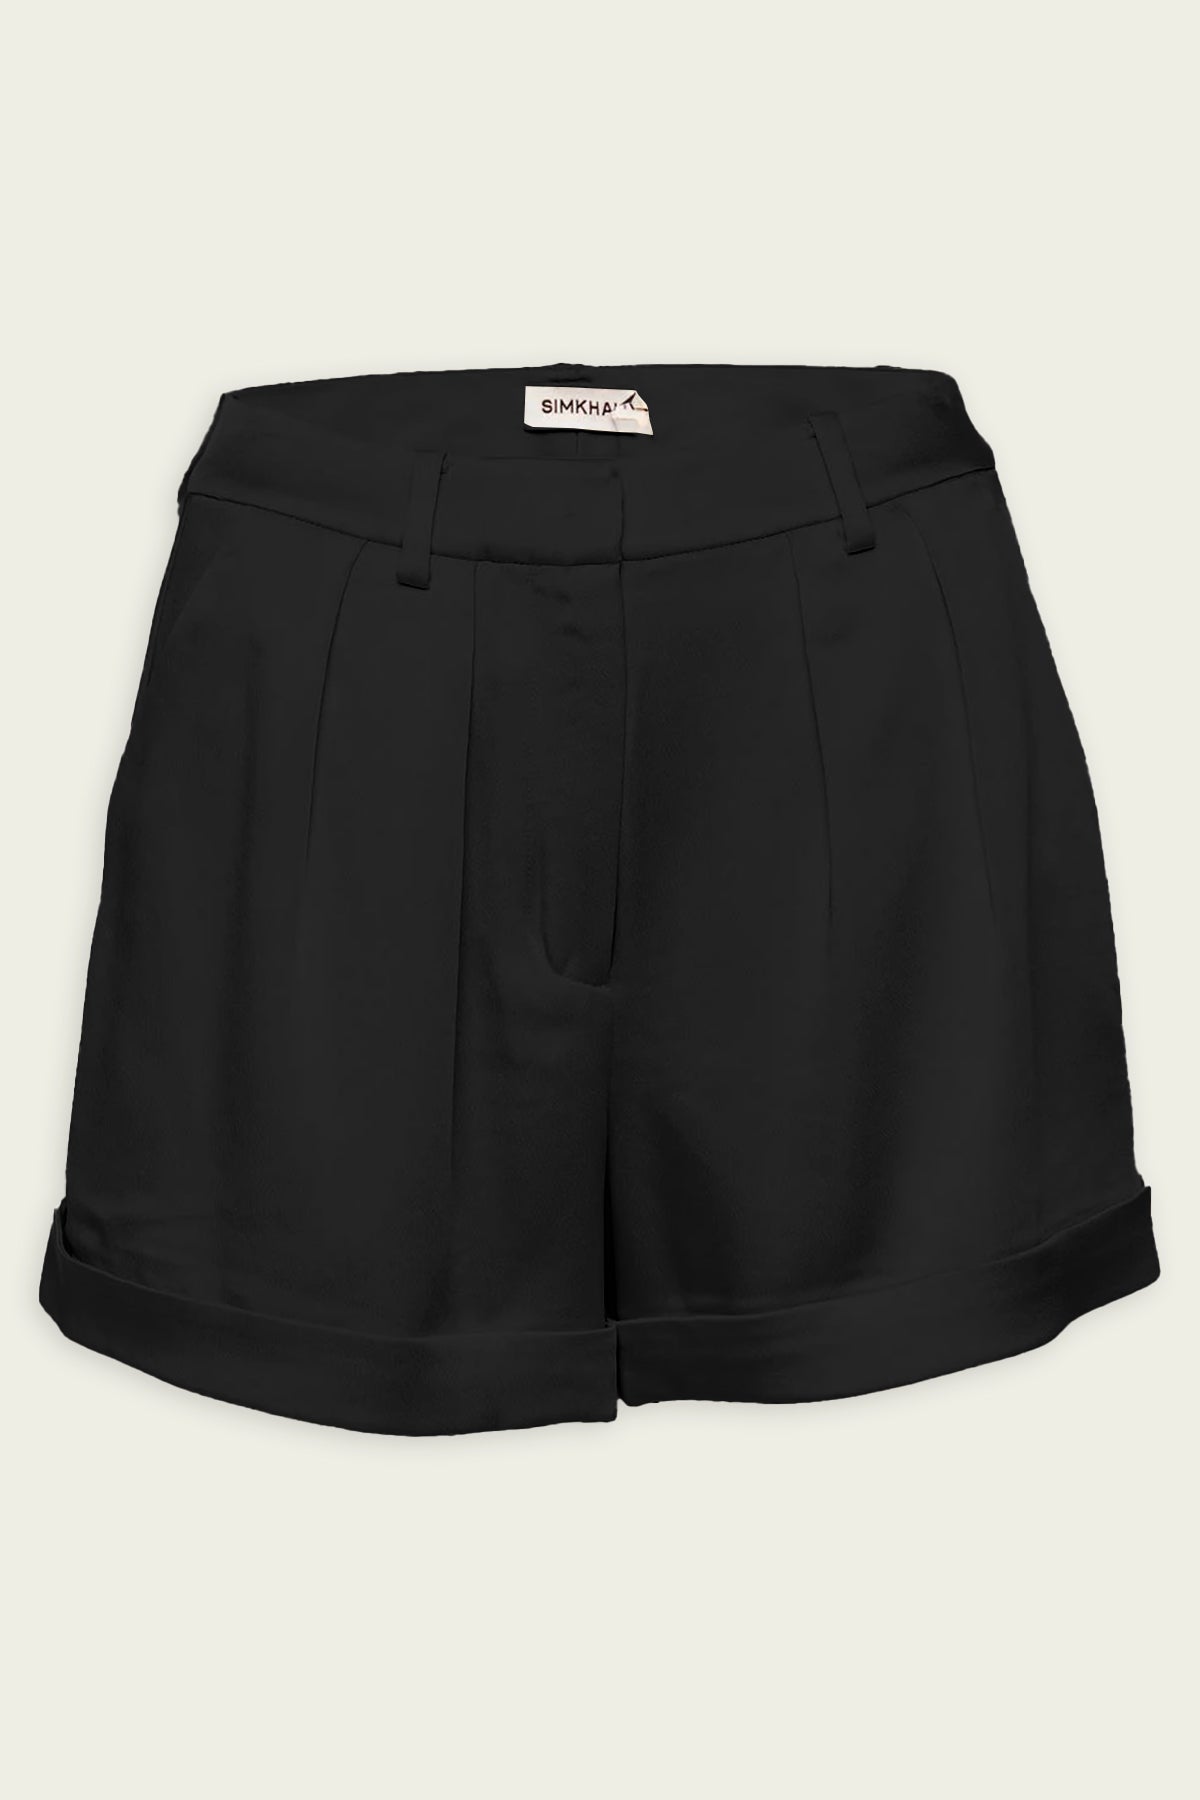 Design by Olivia Women's Basic Solid Active Yoga Biker Shorts 3PACK -  Black/Black/Black S at  Women's Clothing store